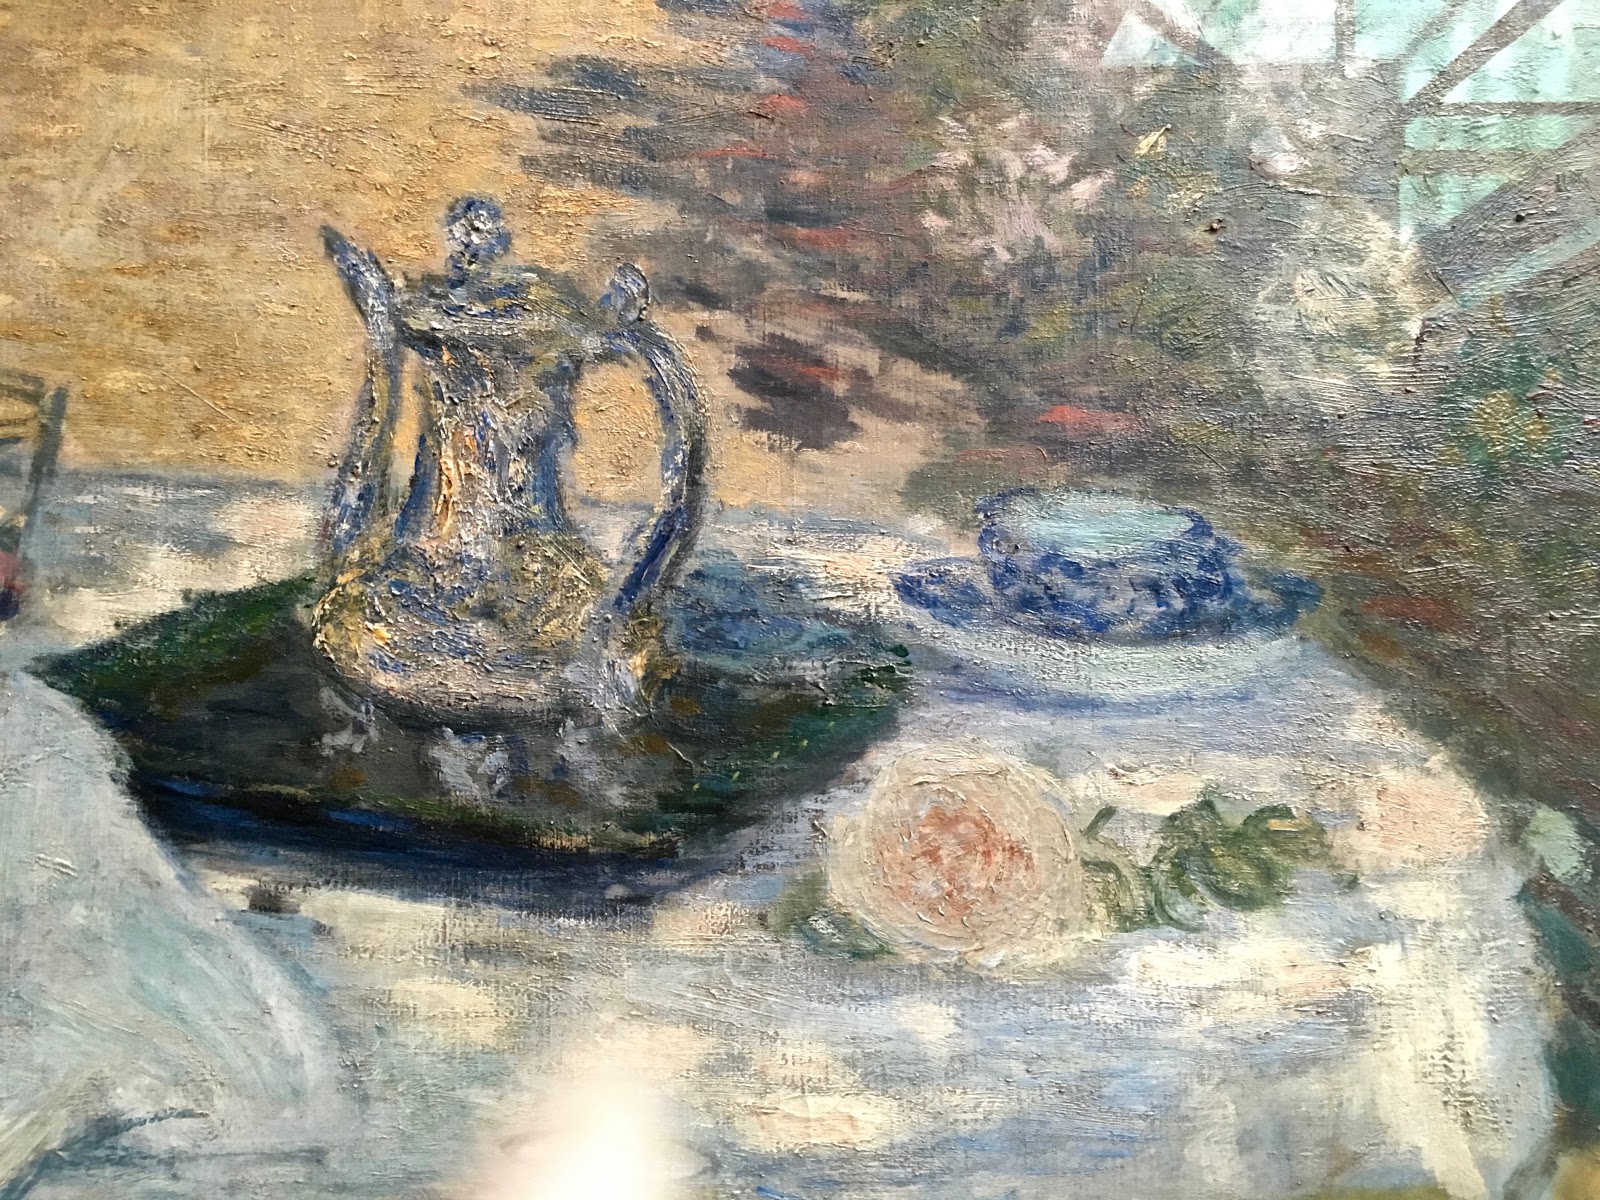 Claude+Monet-1840-1926 (775).jpg